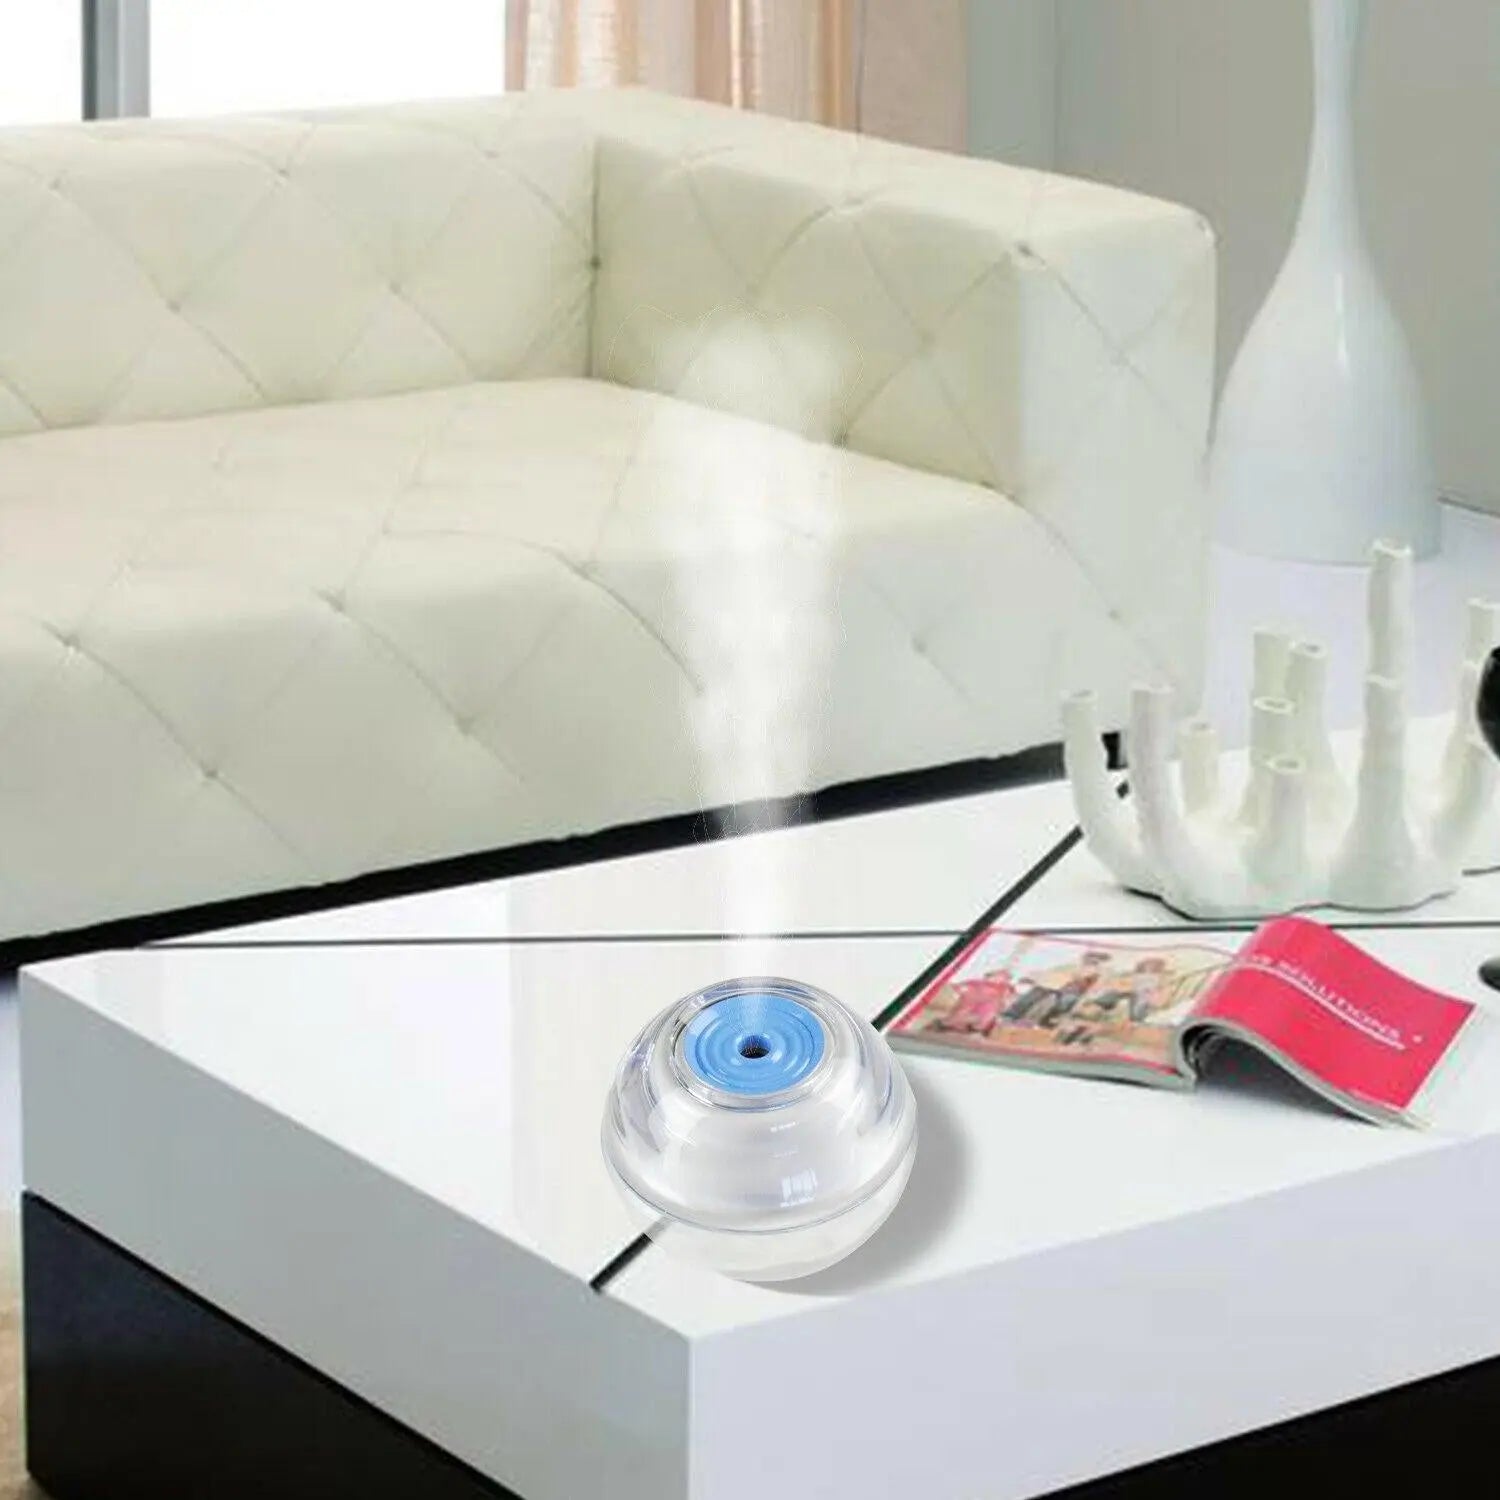 USB Air Humidifier Ultrasonic LED Crystal Nightlights Mist Diffuser Purifier Deals499